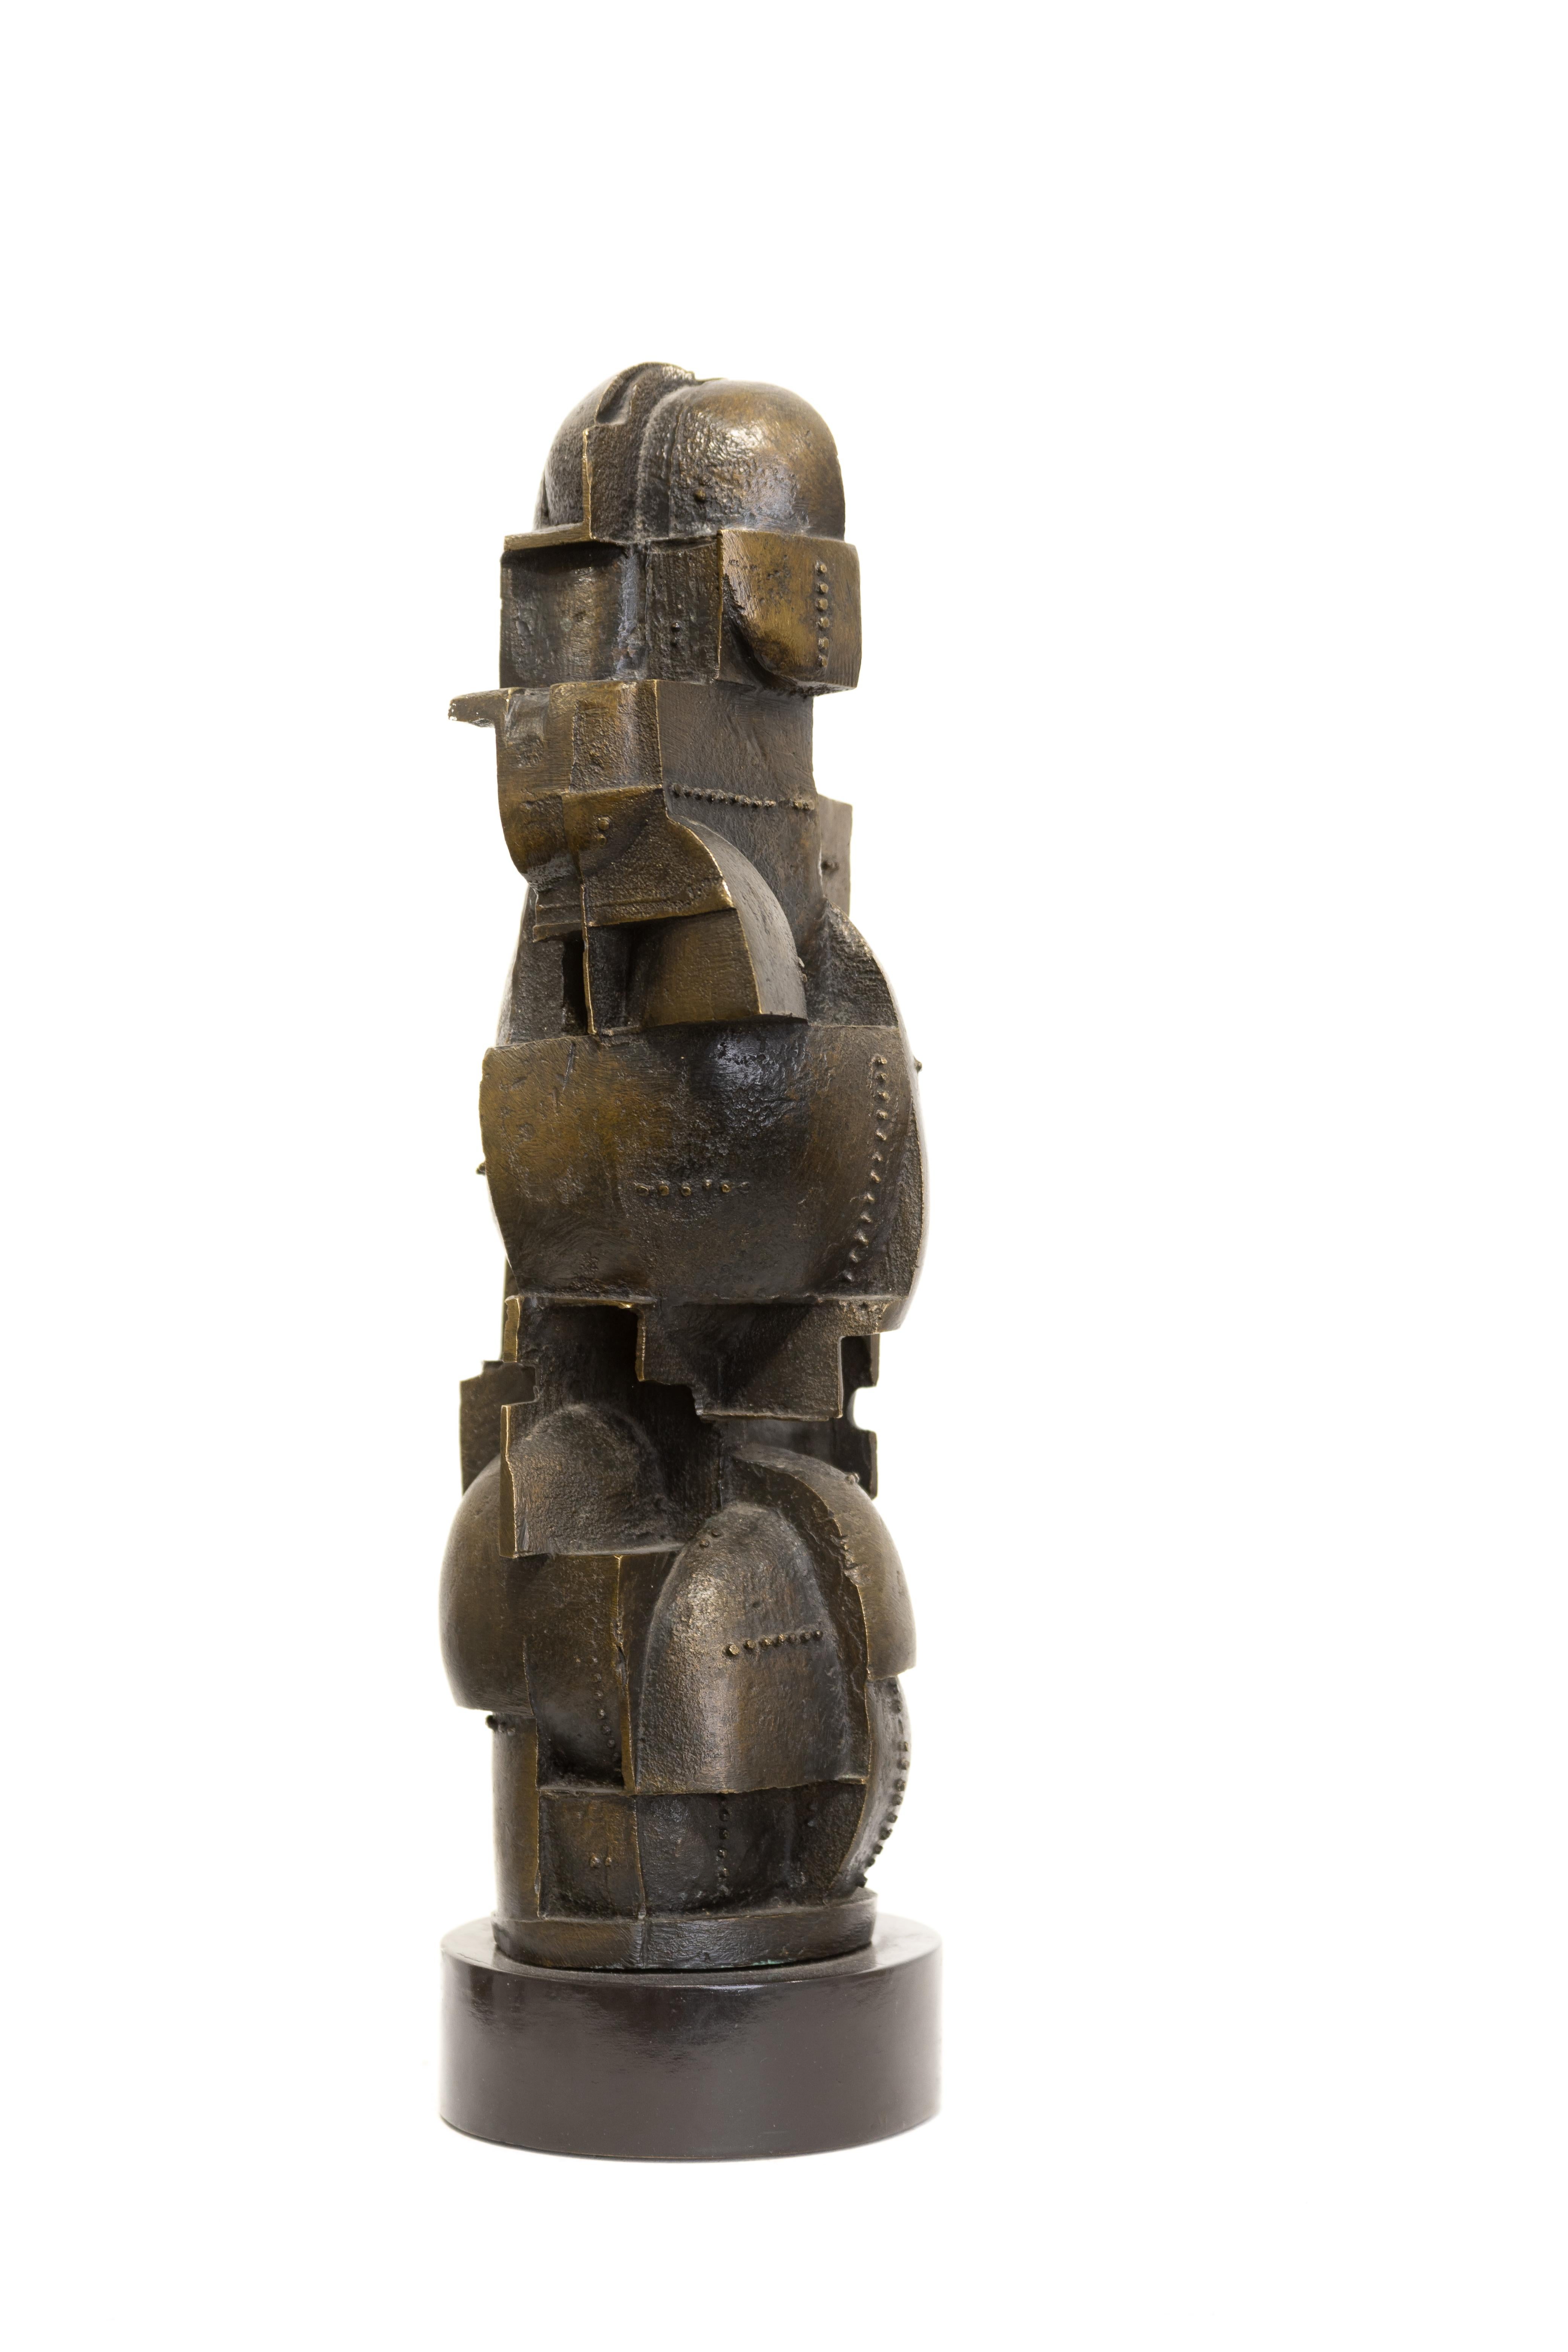 Julius Schmidt "Geometrics" Iron Casting Abstract Sculpture Signed 